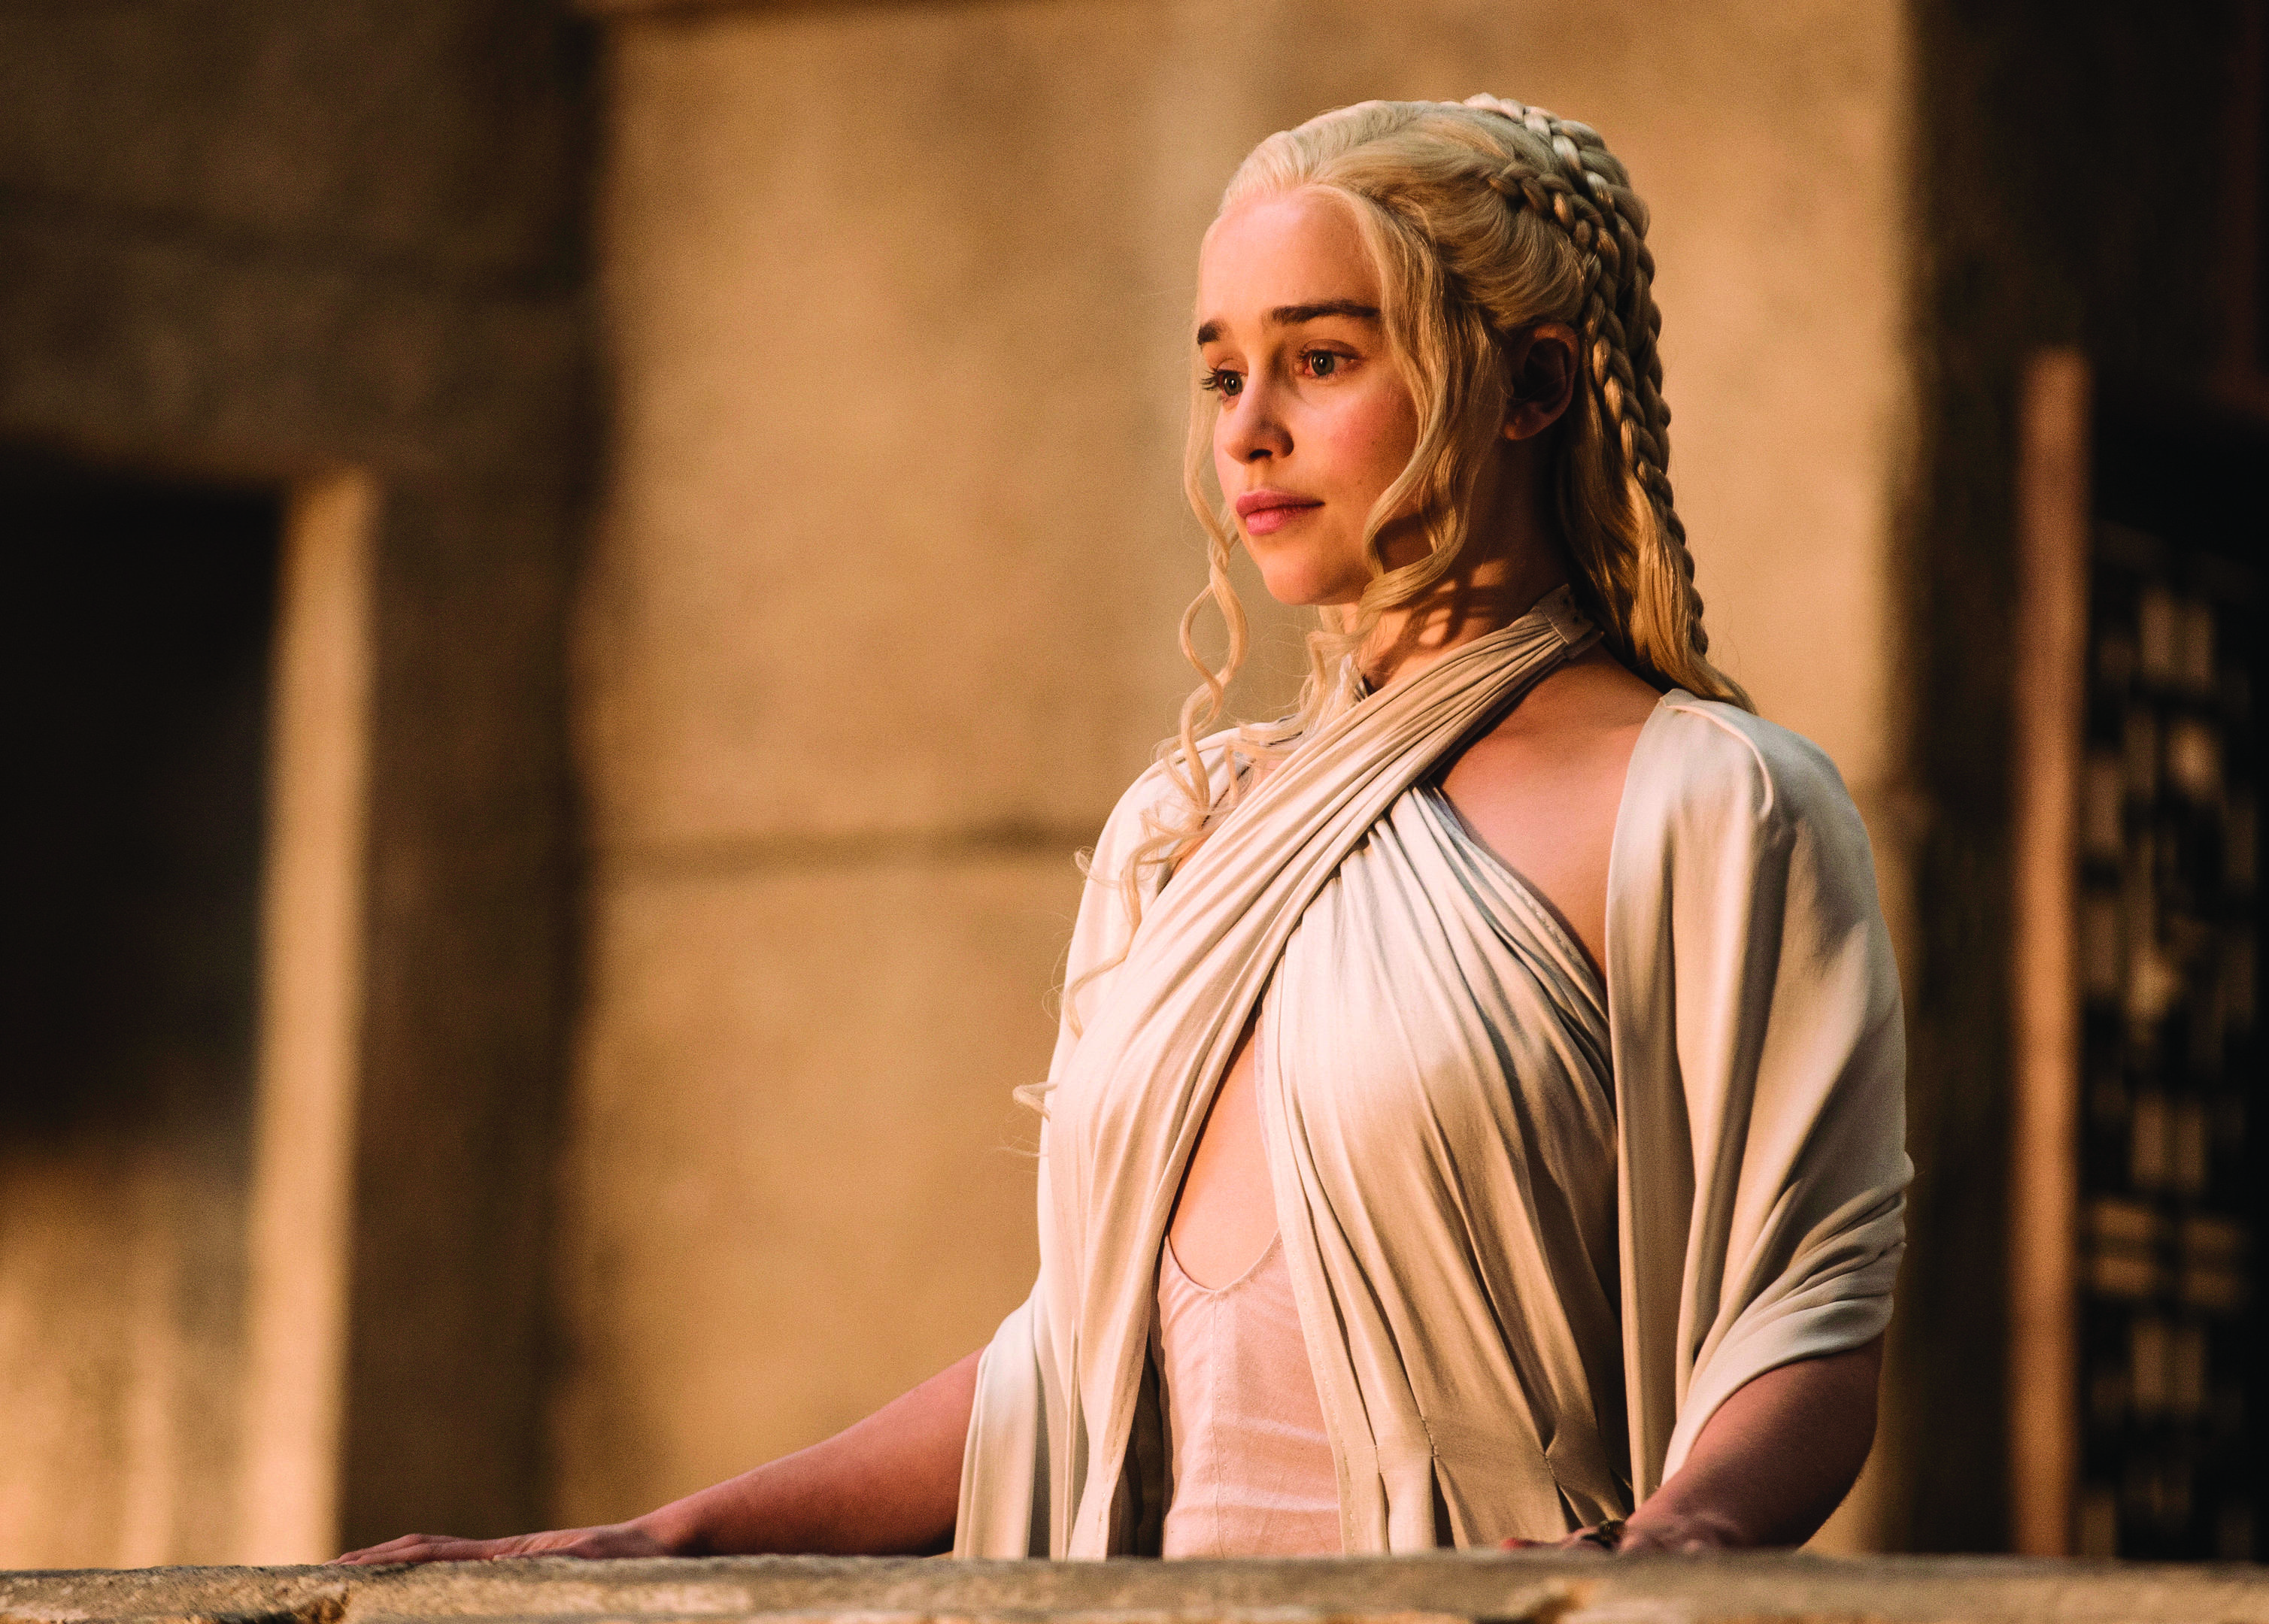 Emilia Clarke as Daenerys Targaryen in Game of Thrones.